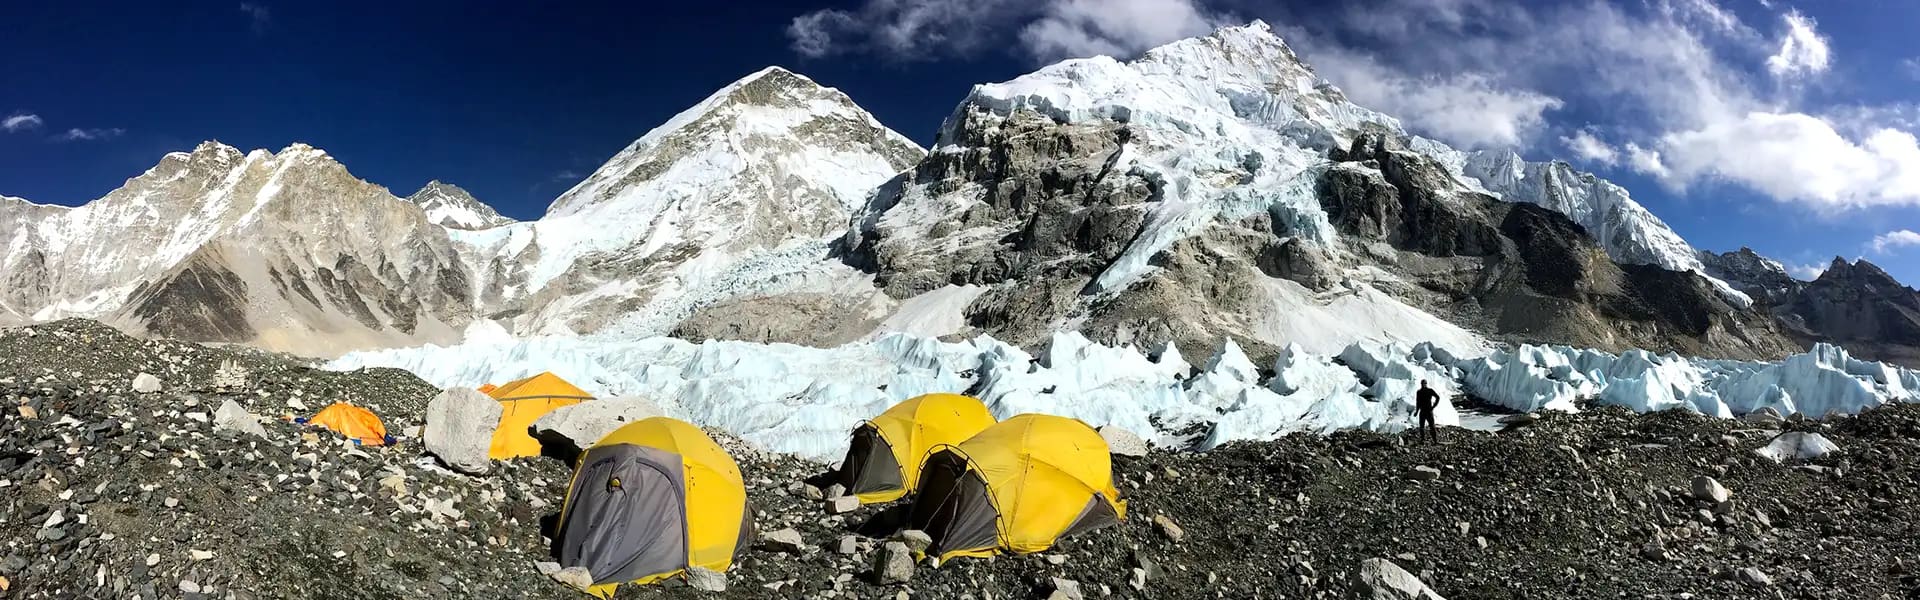 Everest Base Camp Khumbu Valley